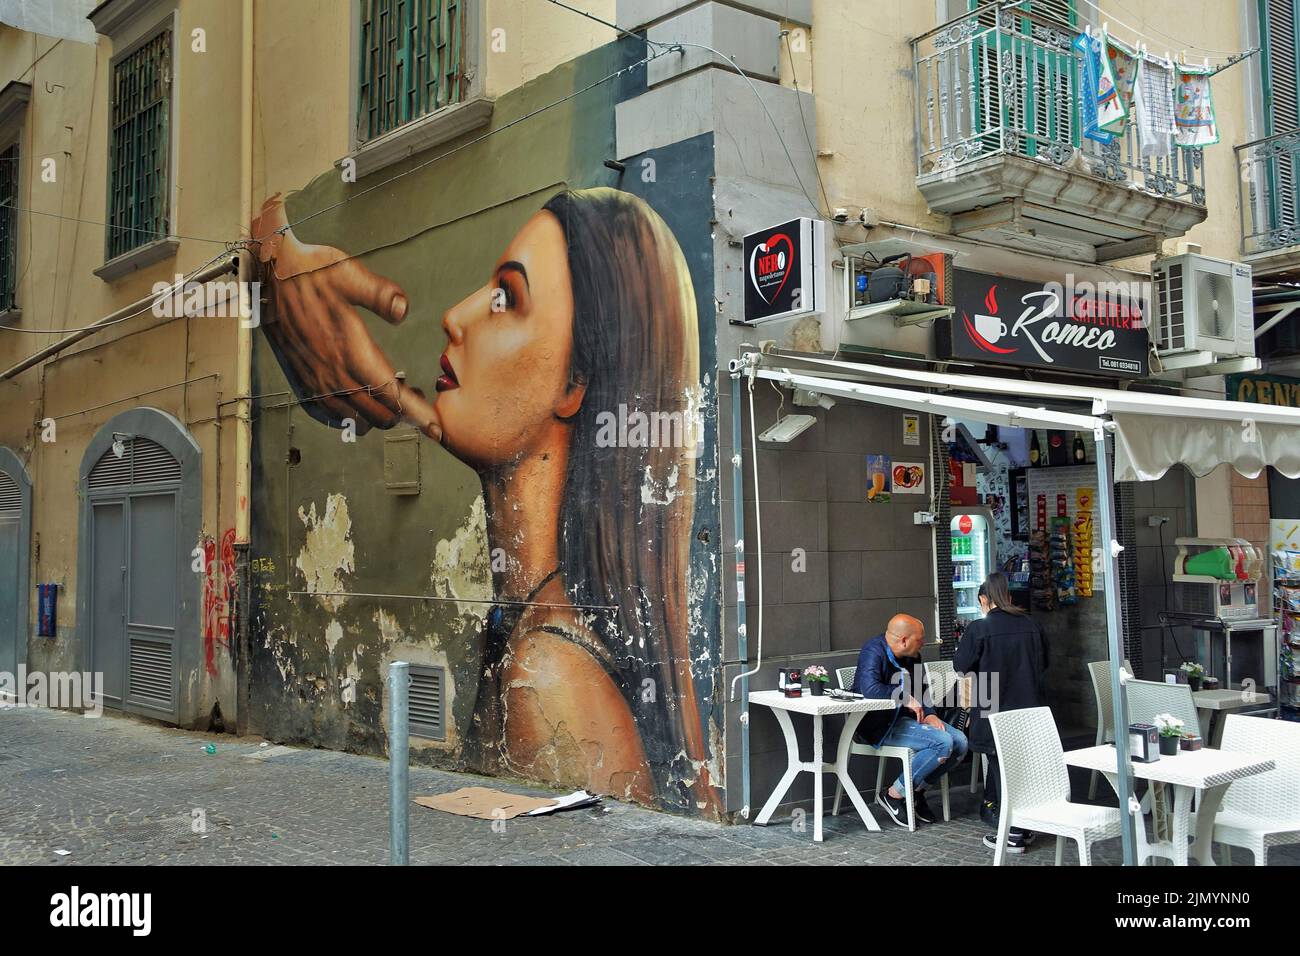 Wall art mural graffiti, pavement cafe, Naples, Campania, Italy, Europe Stock Photo